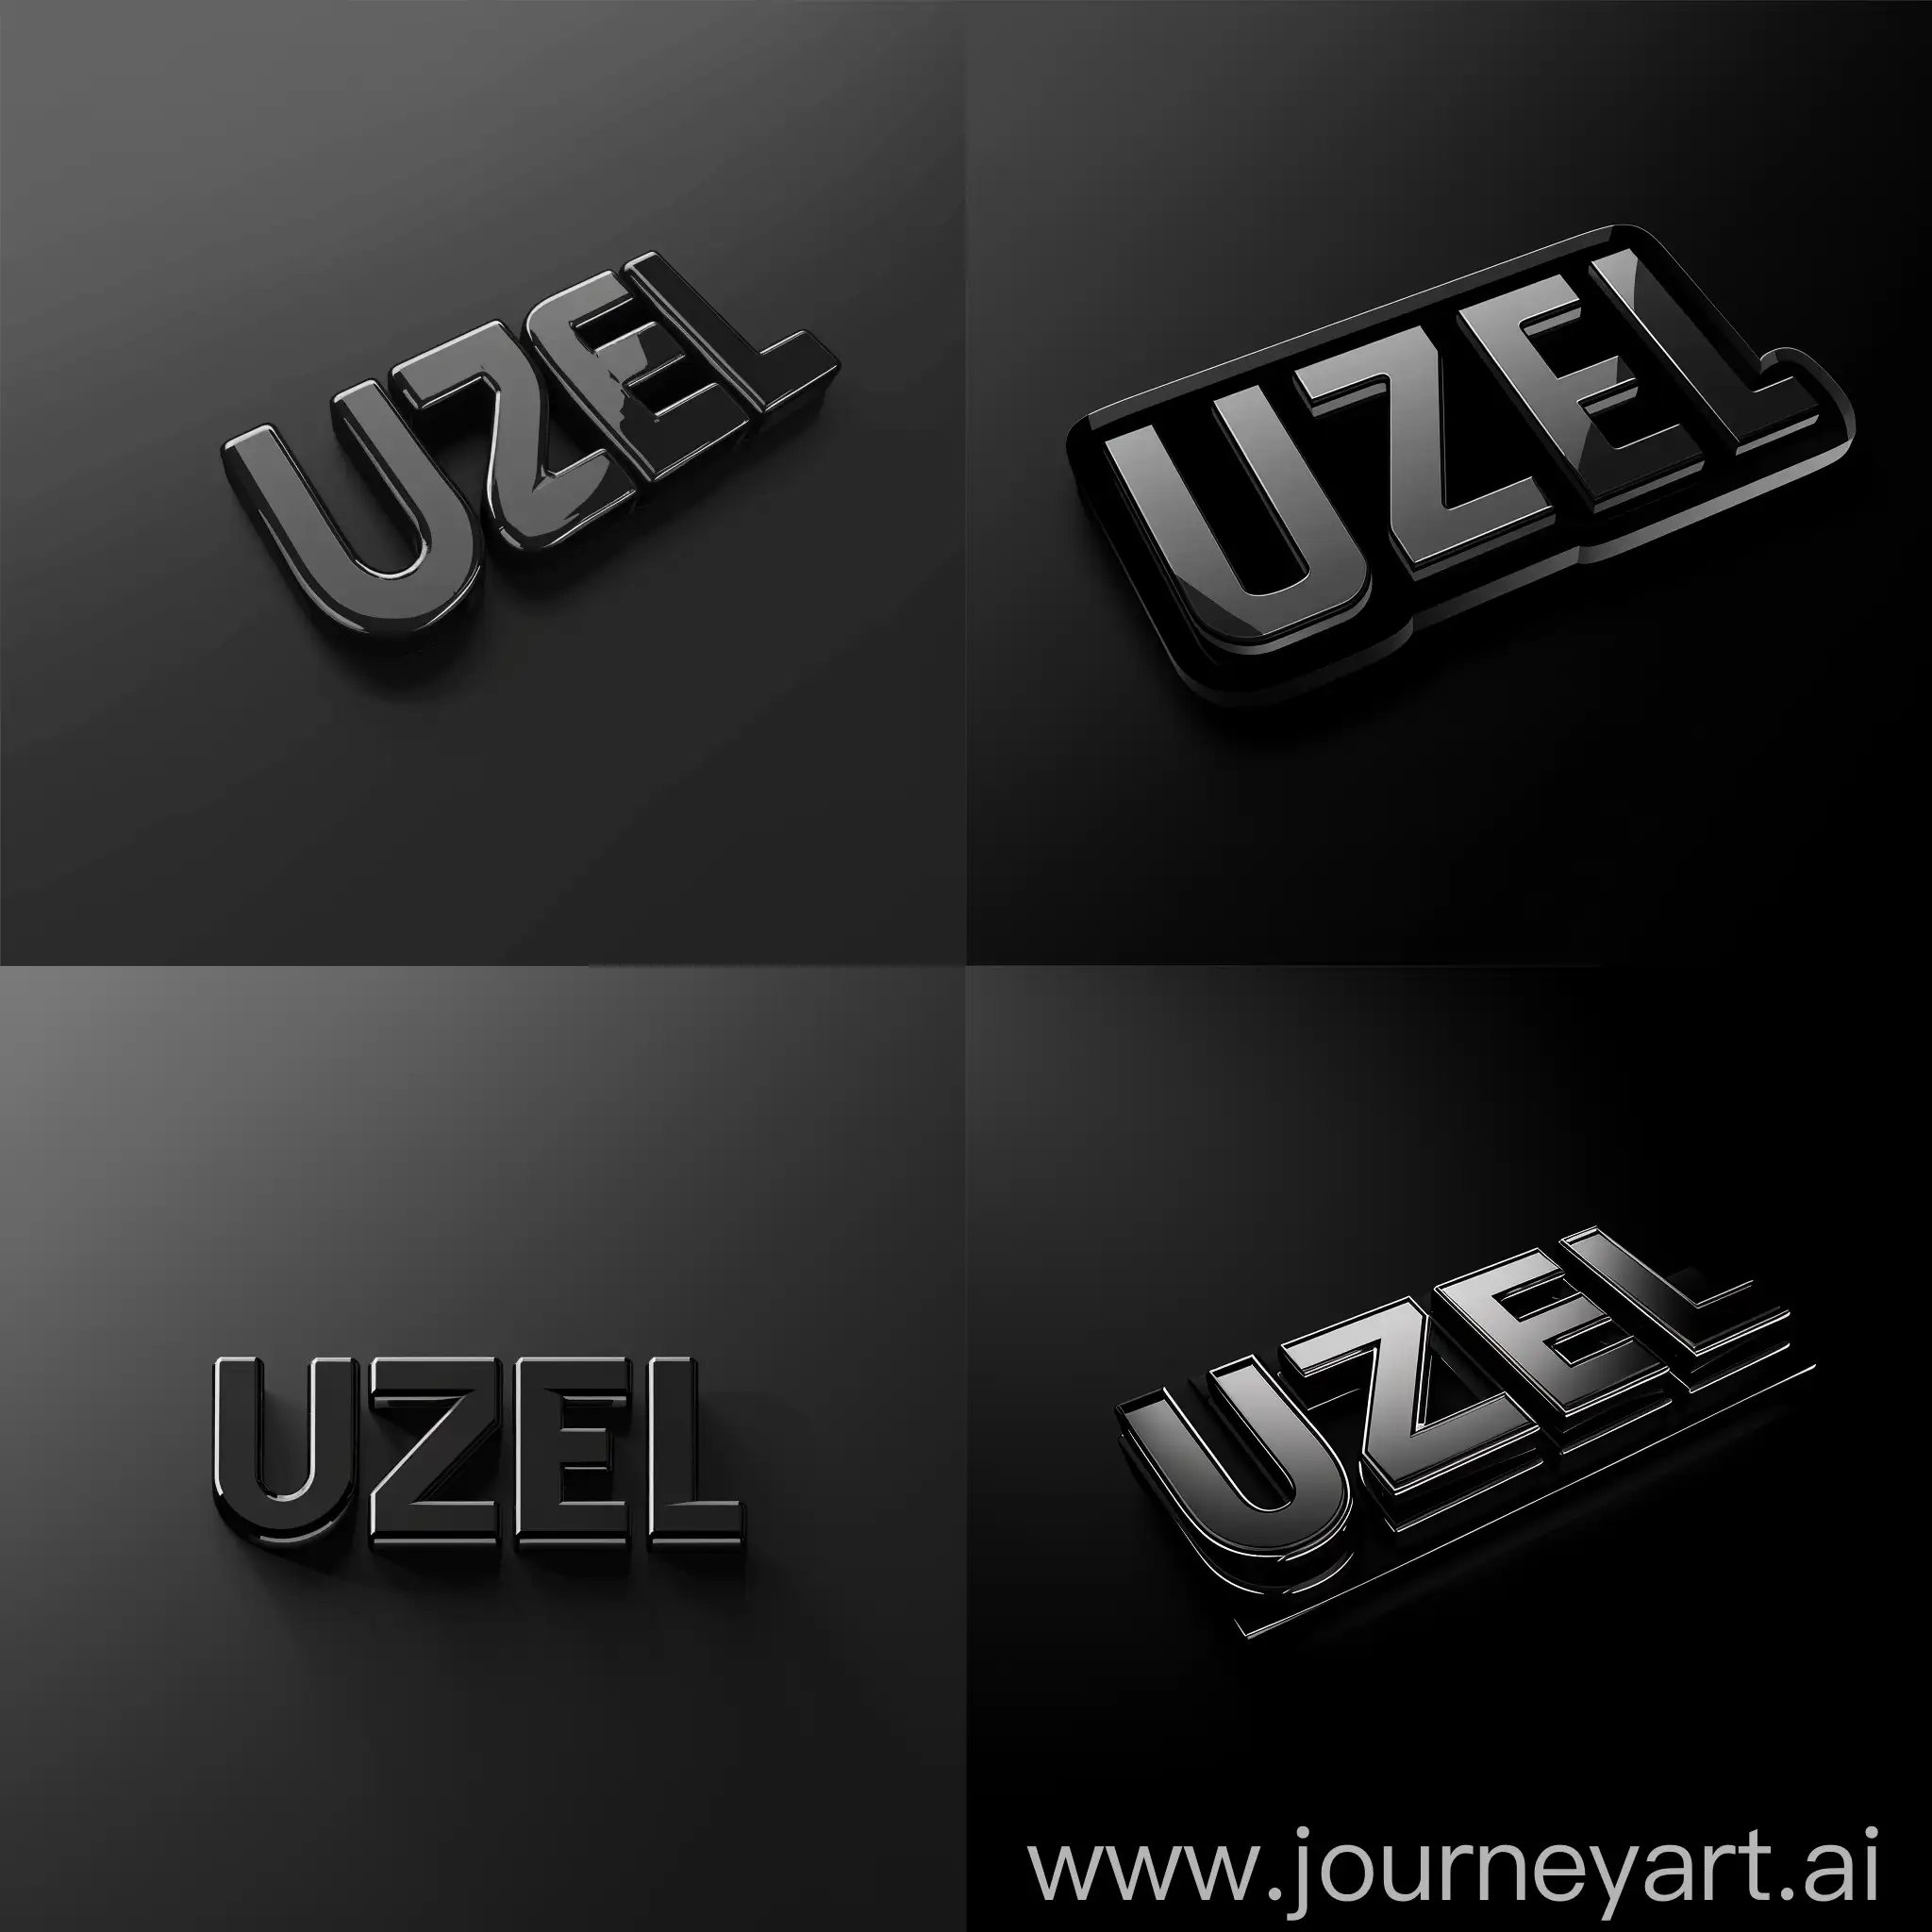 Sleek-and-Modern-3D-UZEL-Logo-Design-in-Two-Shades-of-Black